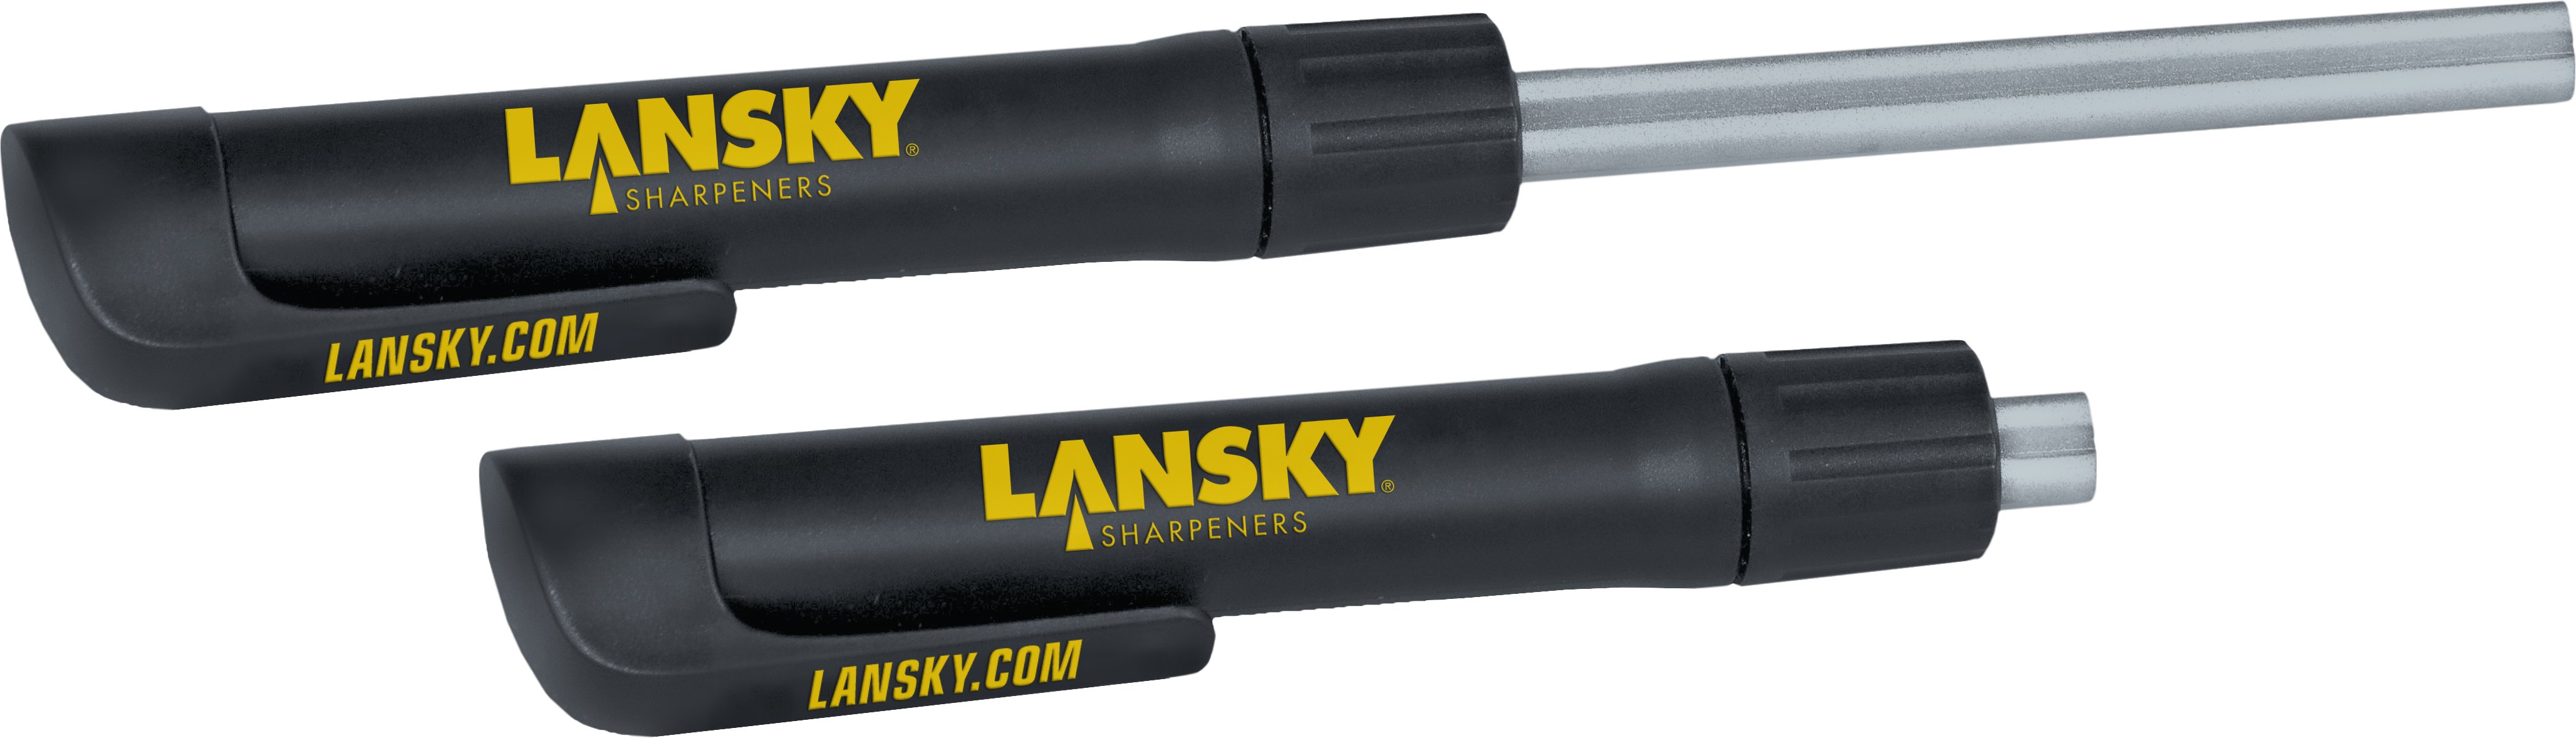 https://op2.0ps.us/original/opplanet-lansky-sharpeners-diamond-pen-serrated-blades-drod1-main